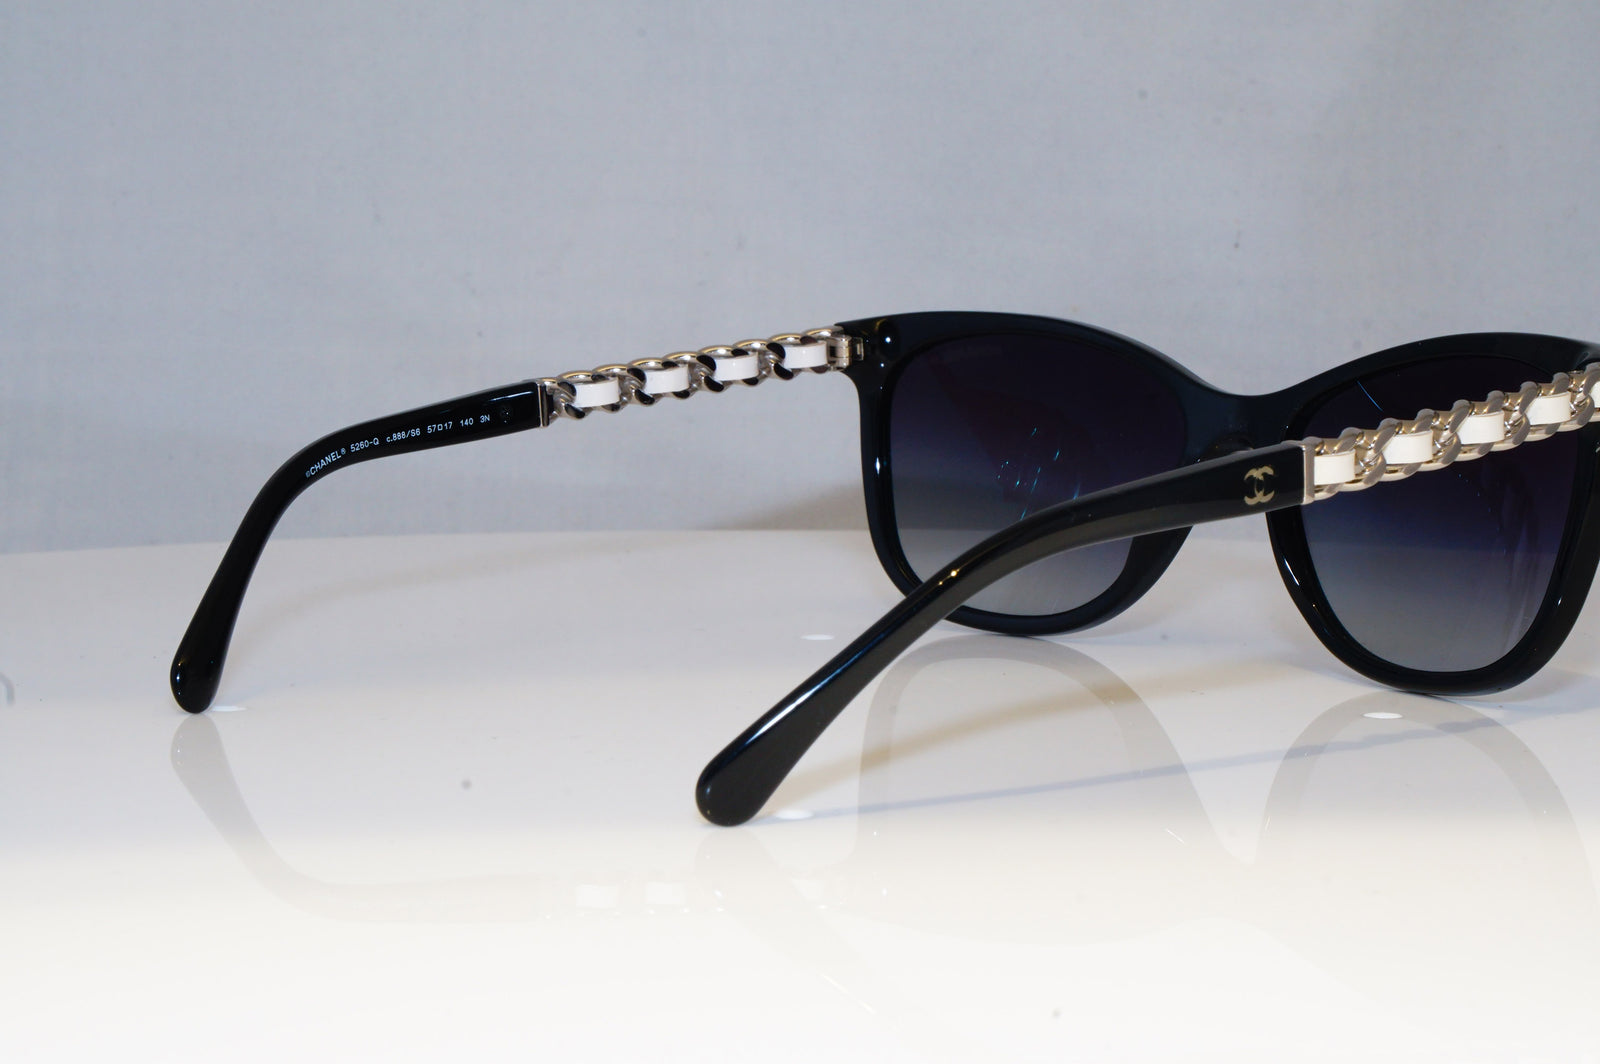 CHANEL 5260-Q C.574/S9 Tortoise Brown/Chain 57-17-140 2P Polarized  Sunglasses $94.99 - PicClick